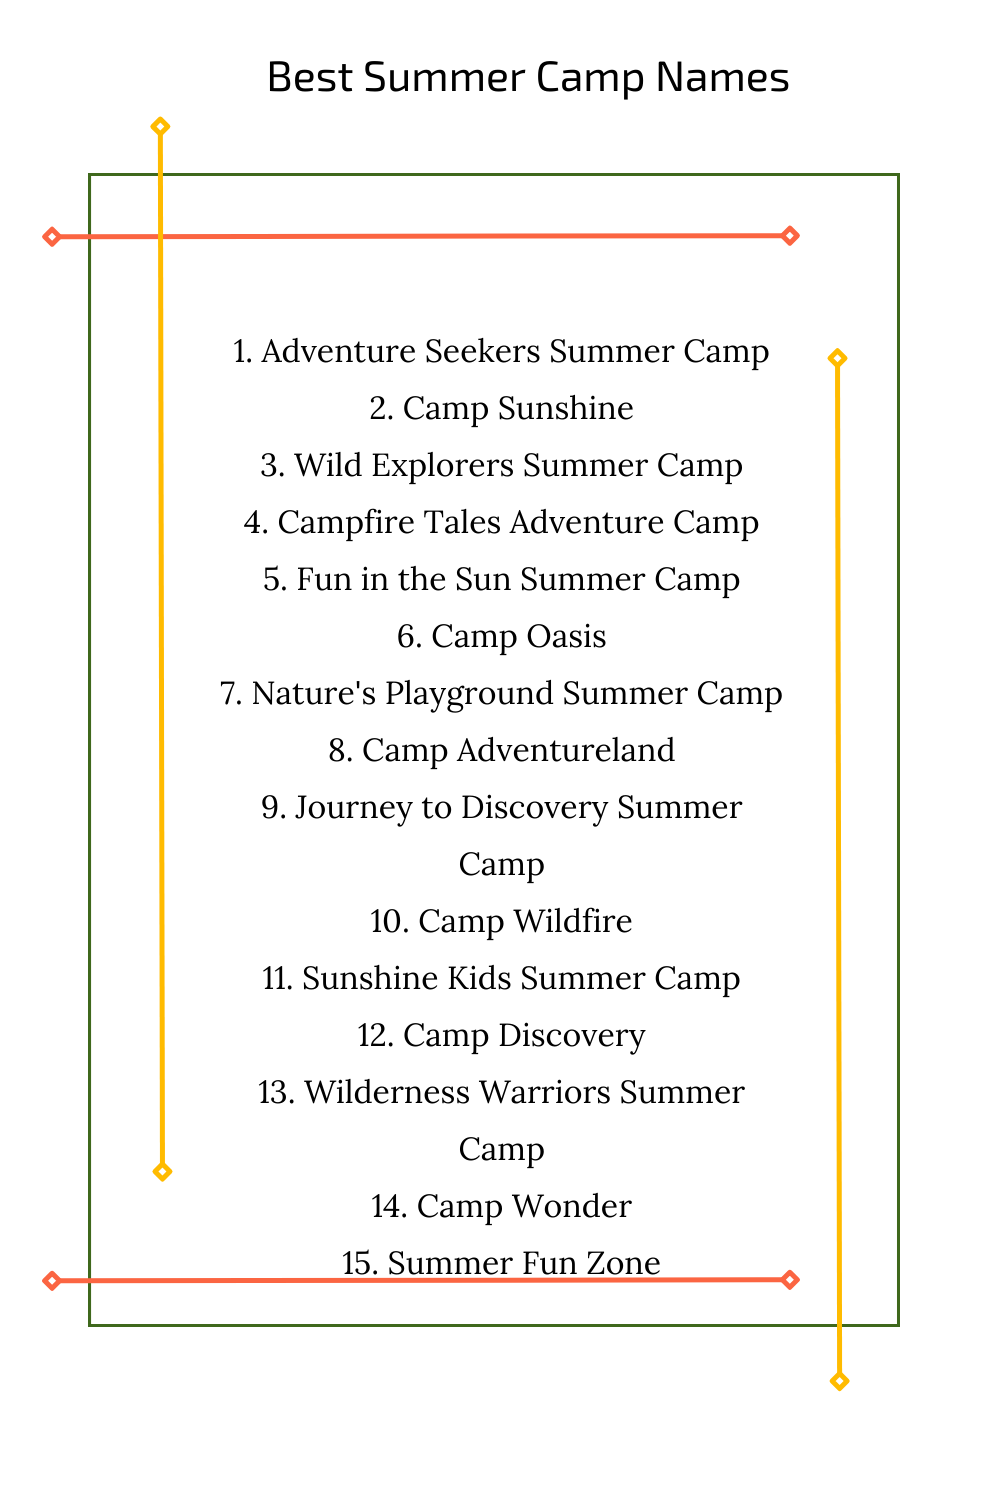 Best Summer Camp Names